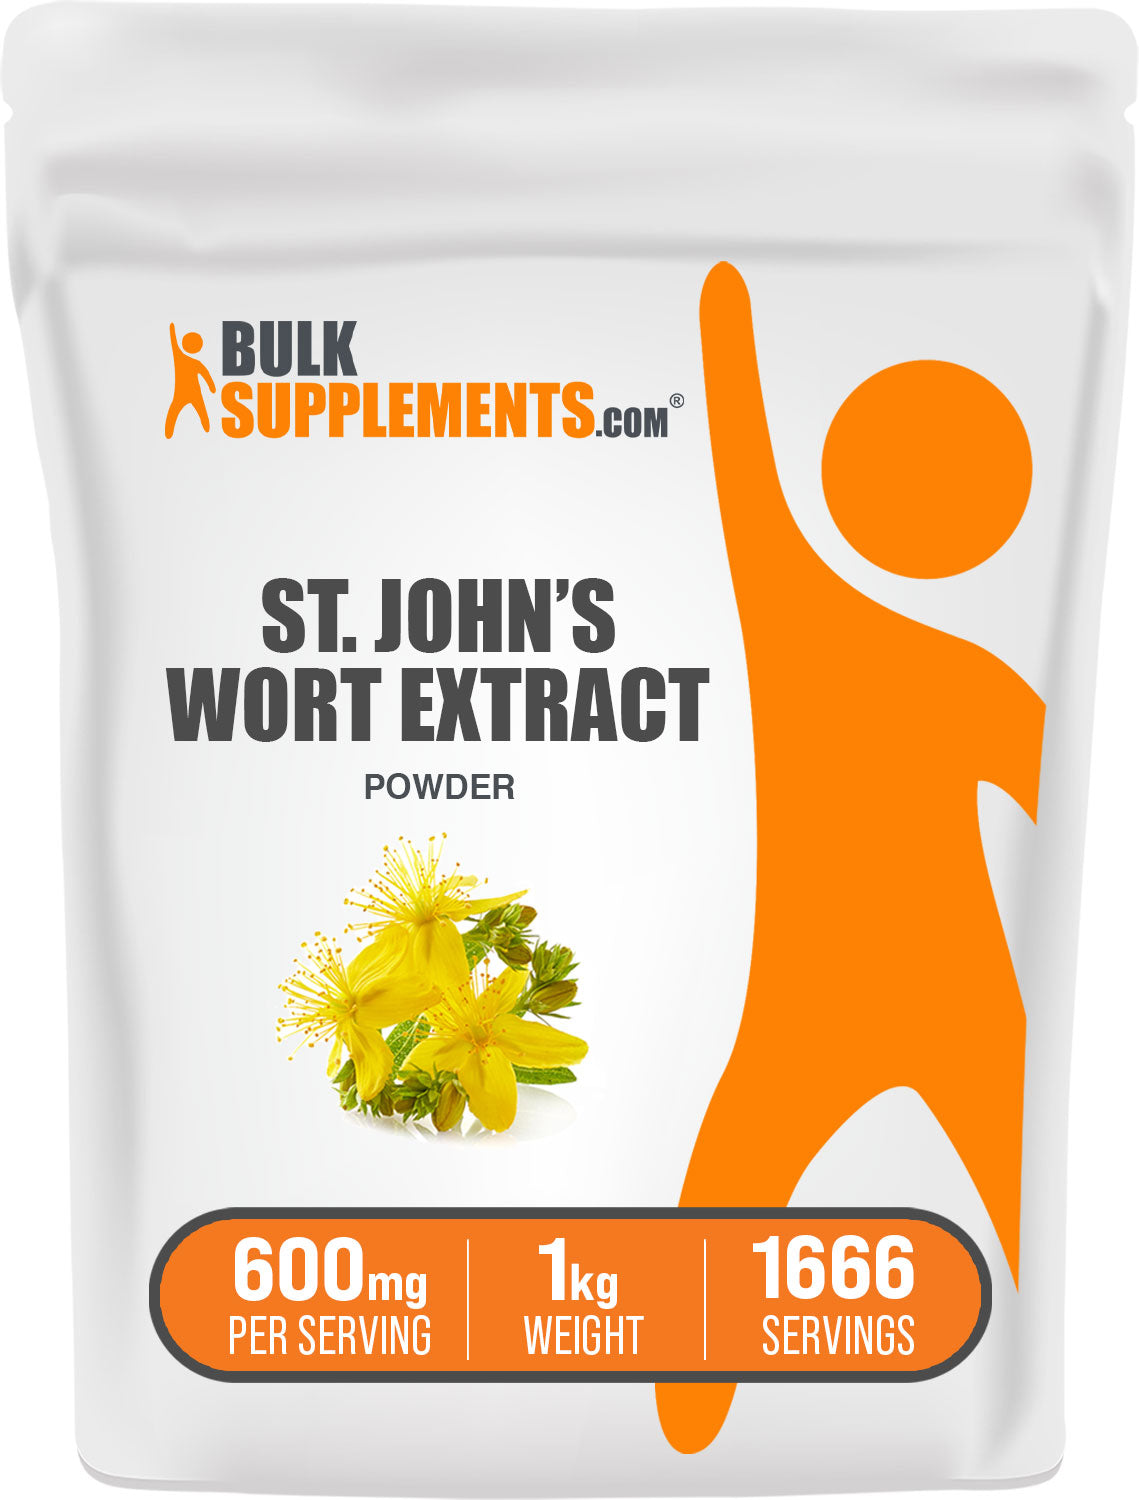 BulkSupplements St. John's Wort Extract Powder 1kg bag